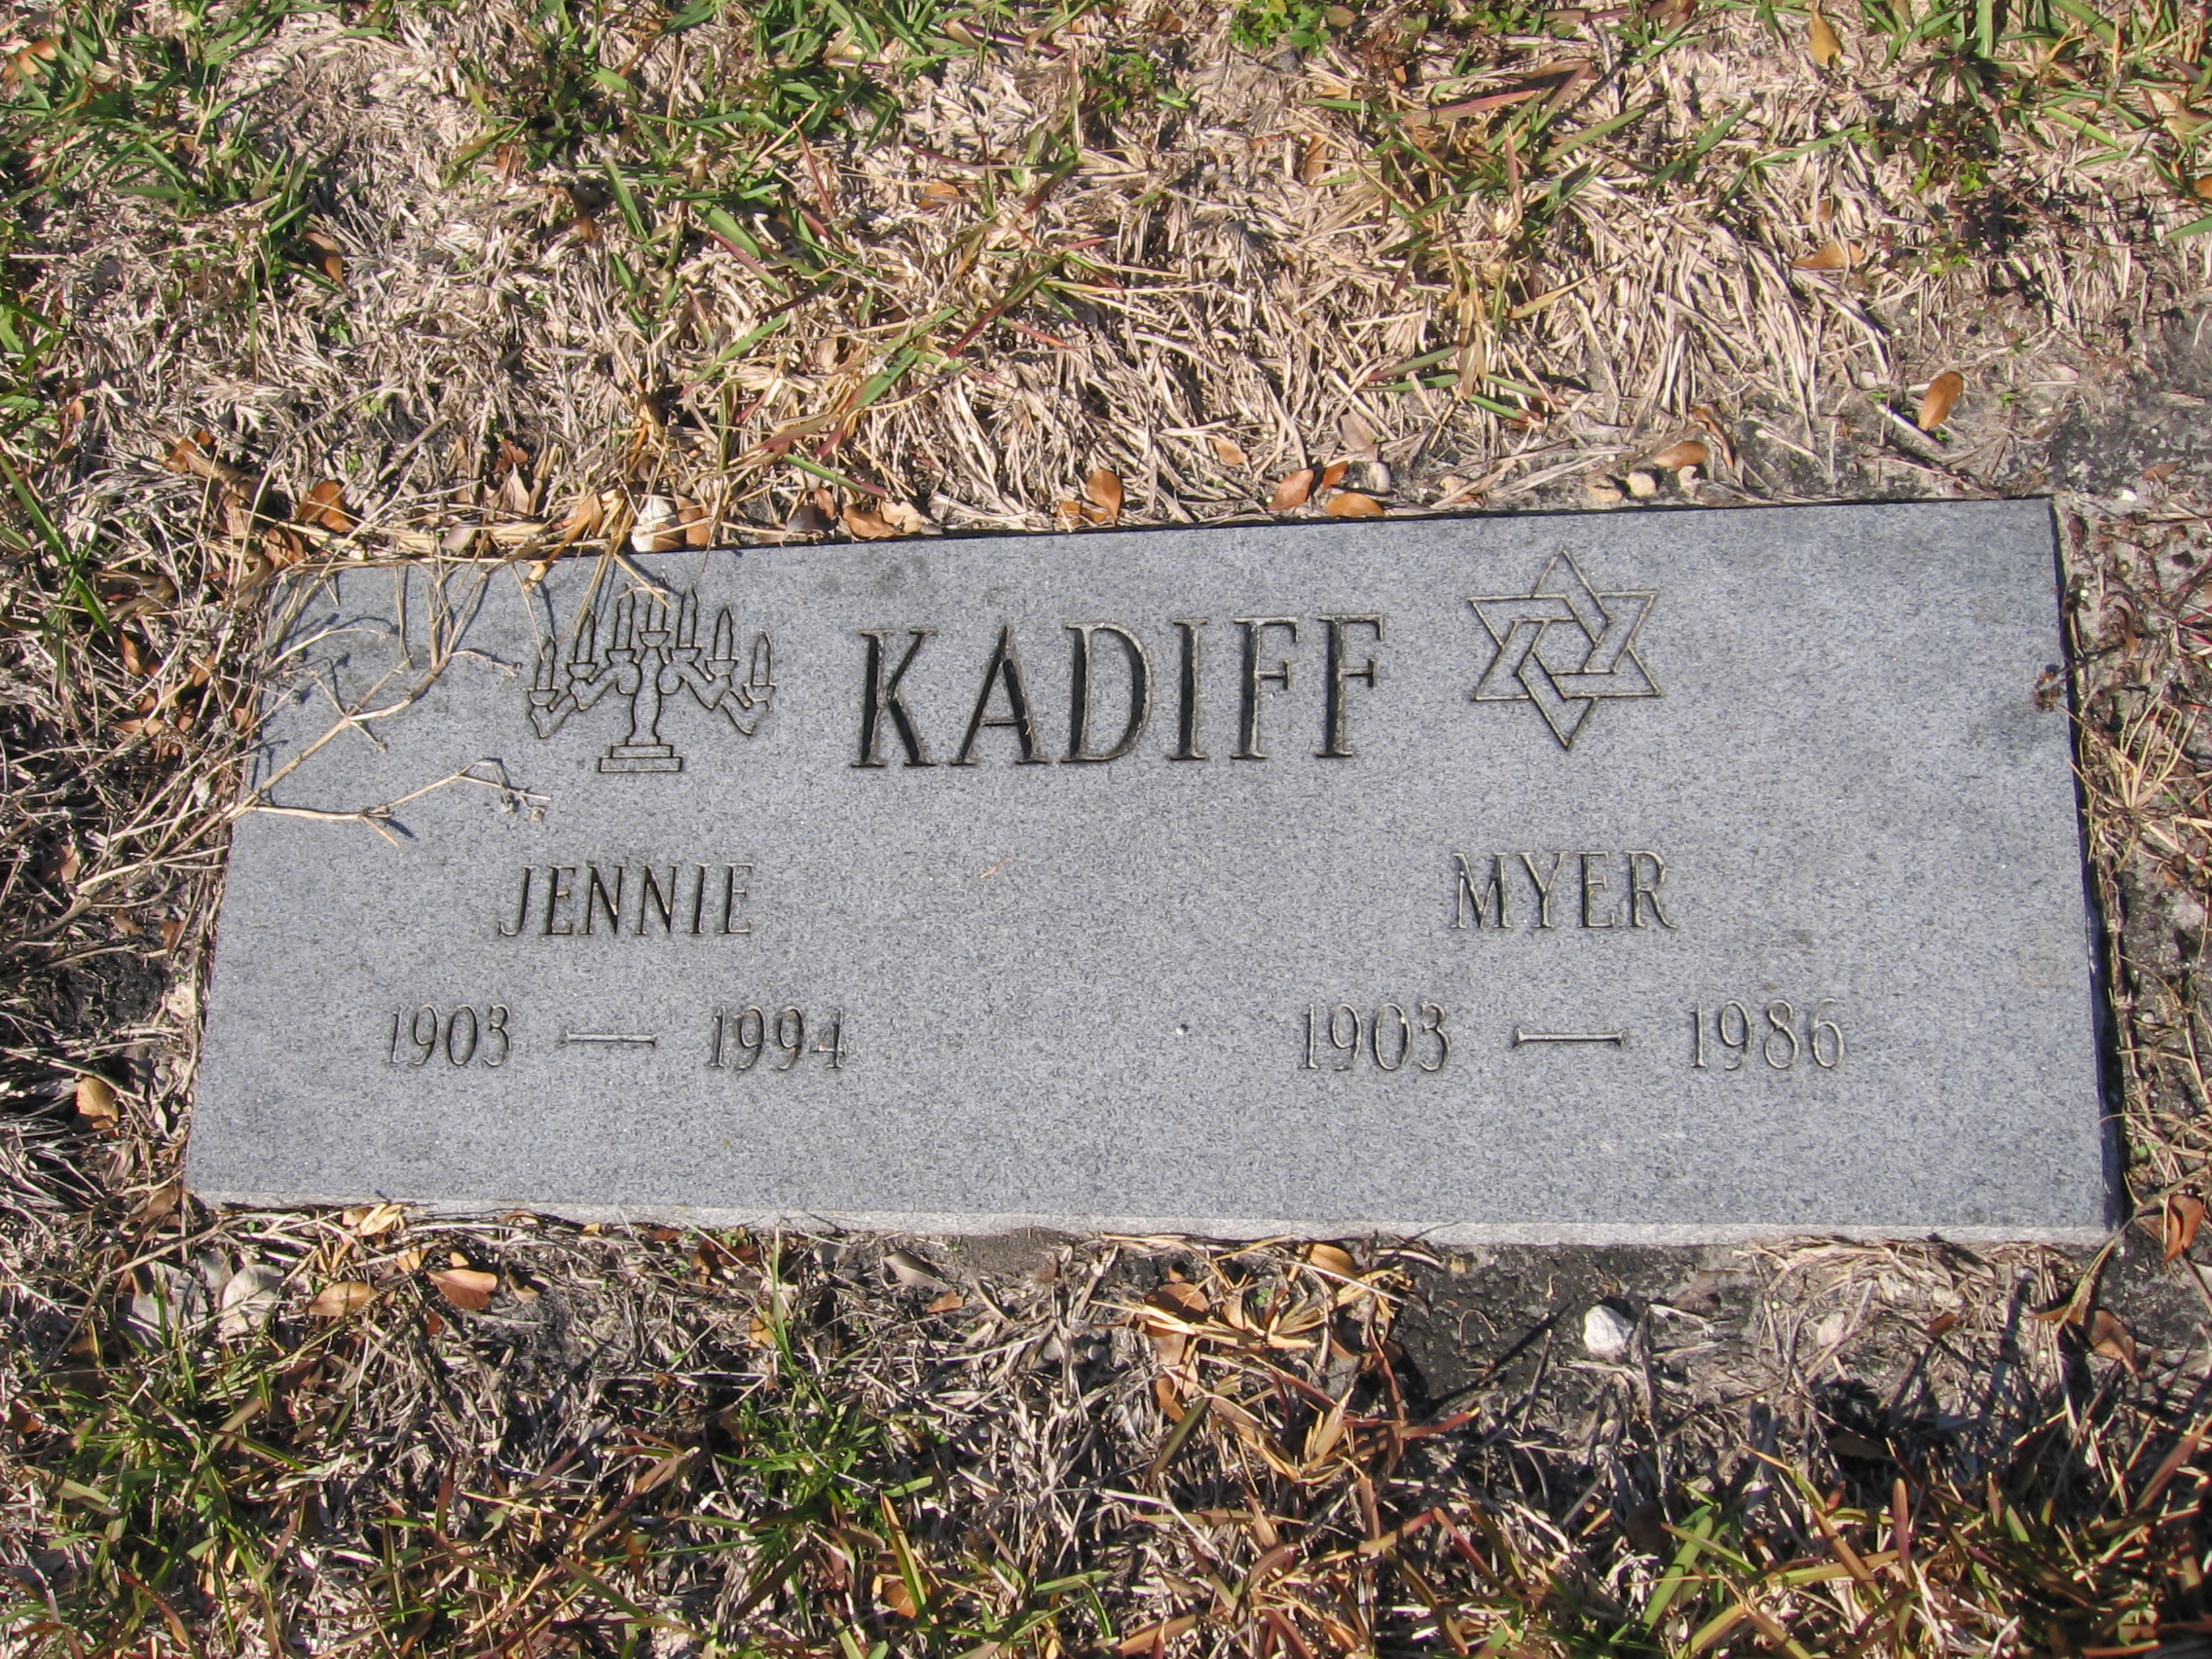 Jennie Kadiff